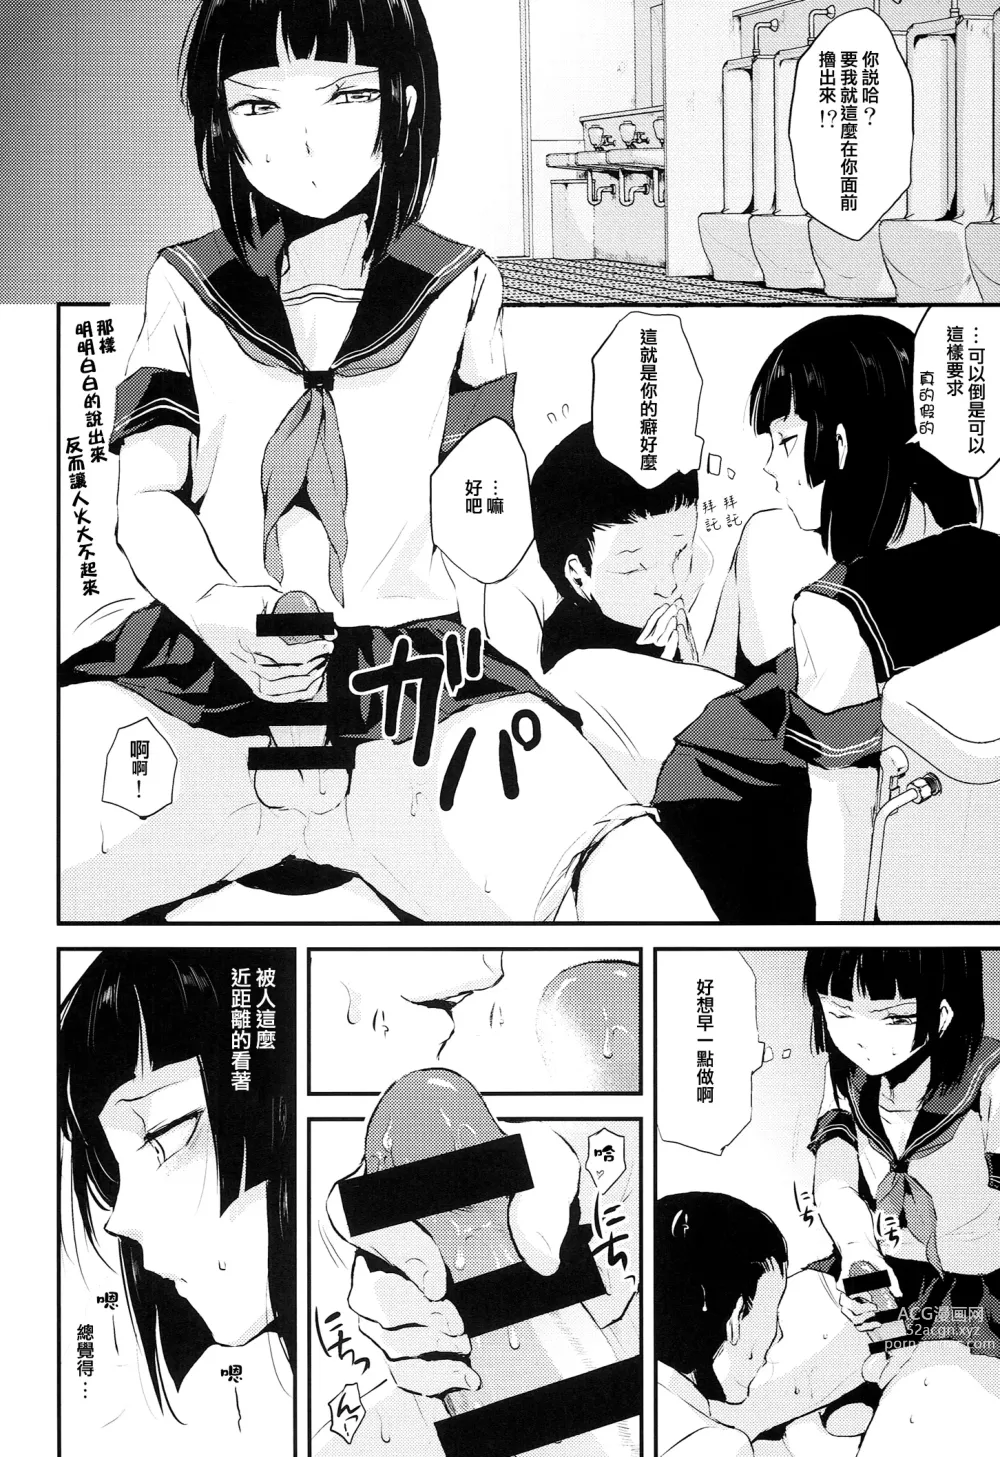 Page 6 of manga 要04 -かなめ-